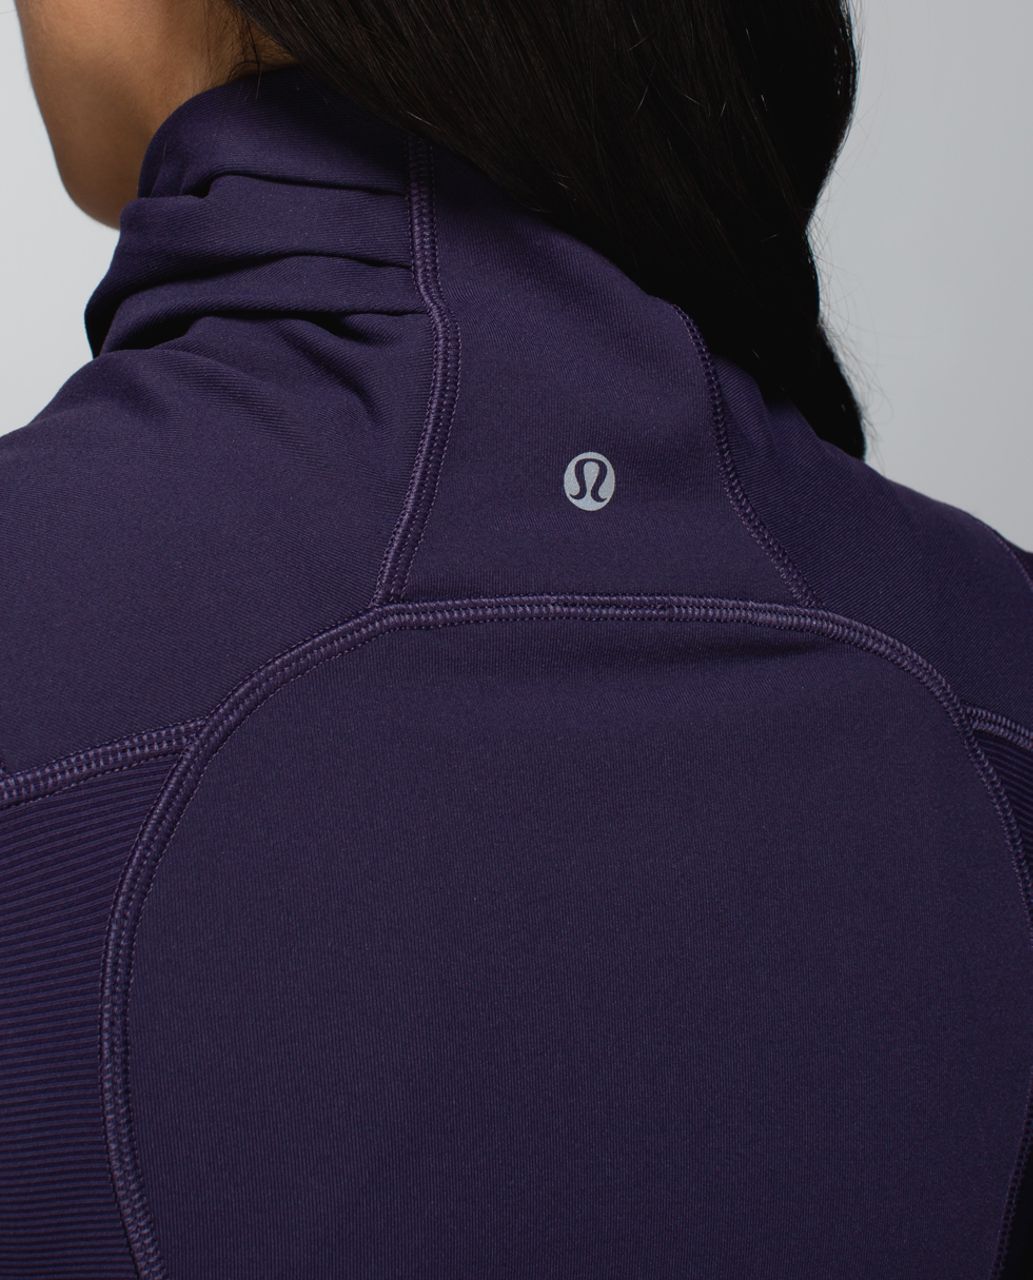 Lululemon Bhakti Asymmetrical Zipper Jacket. Pique Gray/Black. Size 8.